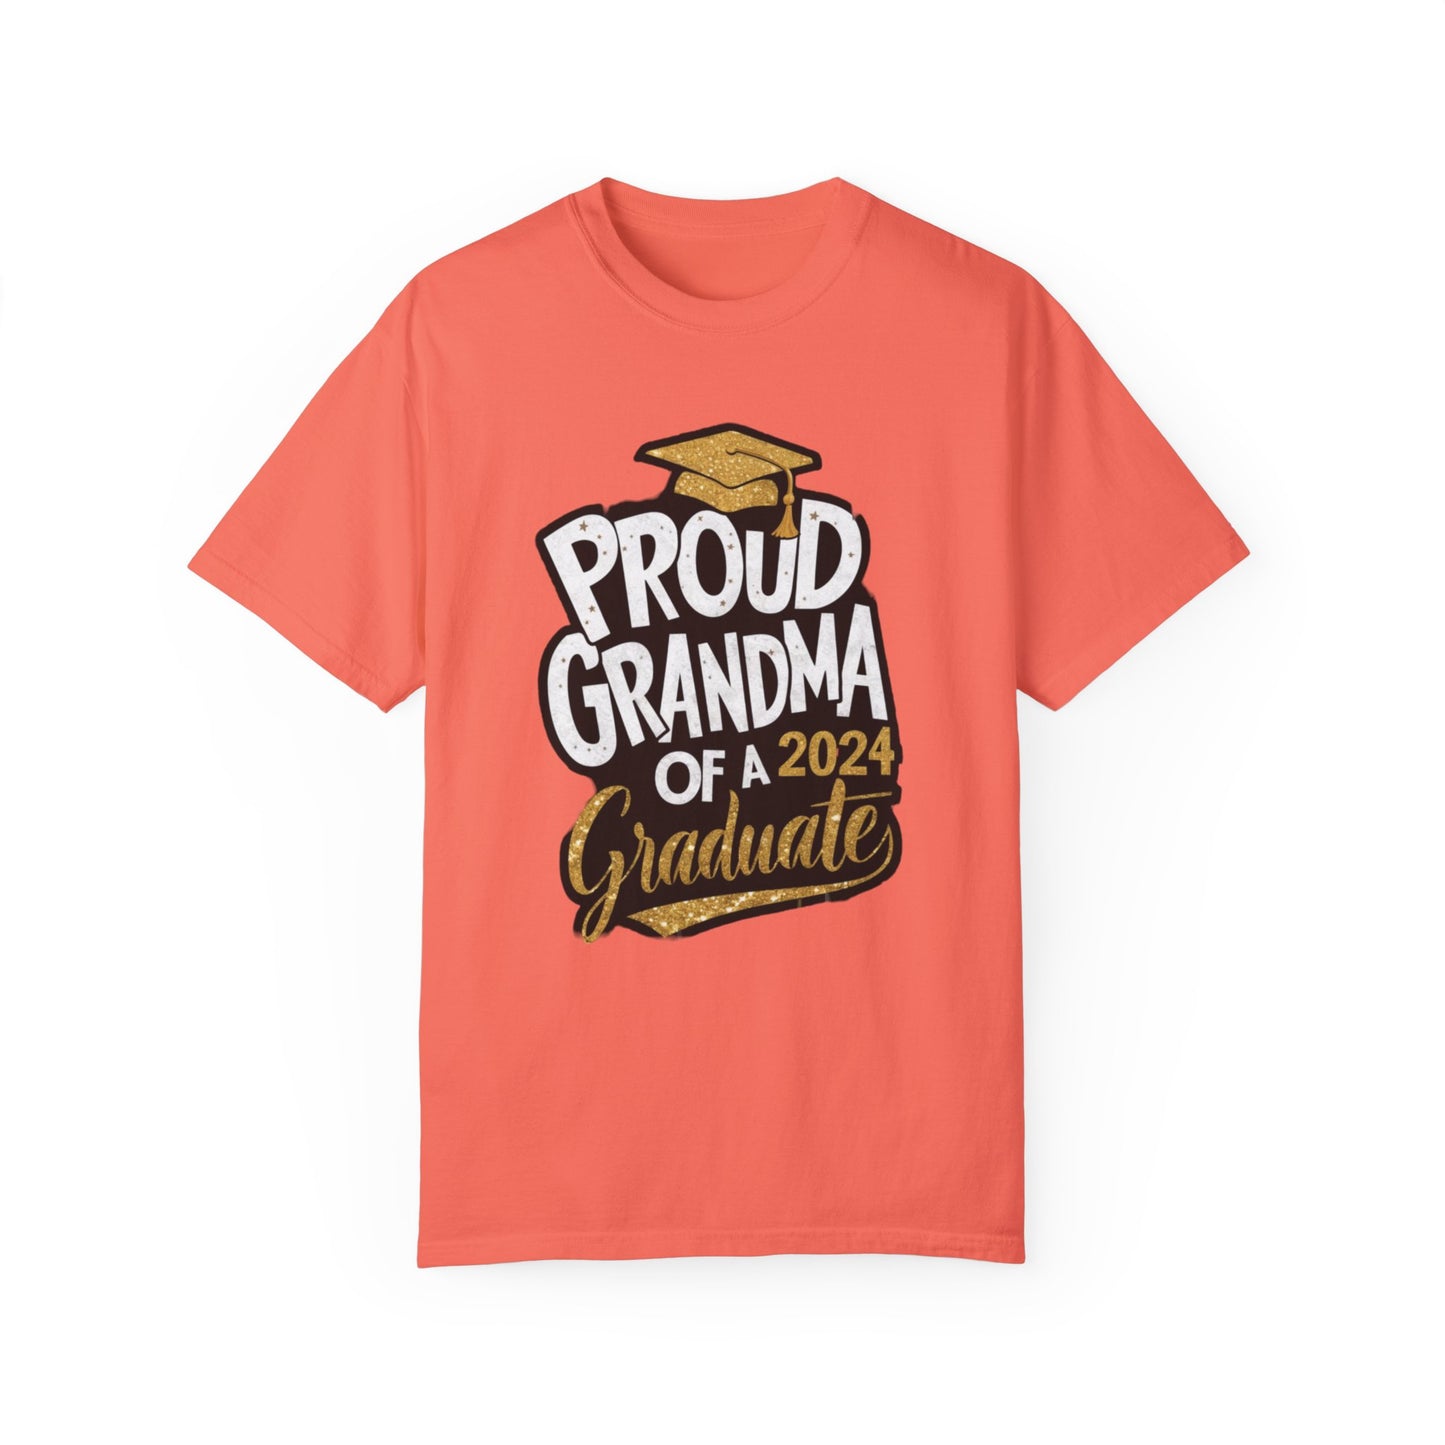 Proud of Grandma 2024 Graduate Unisex Garment-dyed T-shirt Cotton Funny Humorous Graphic Soft Premium Unisex Men Women Bright Salmon T-shirt Birthday Gift-6